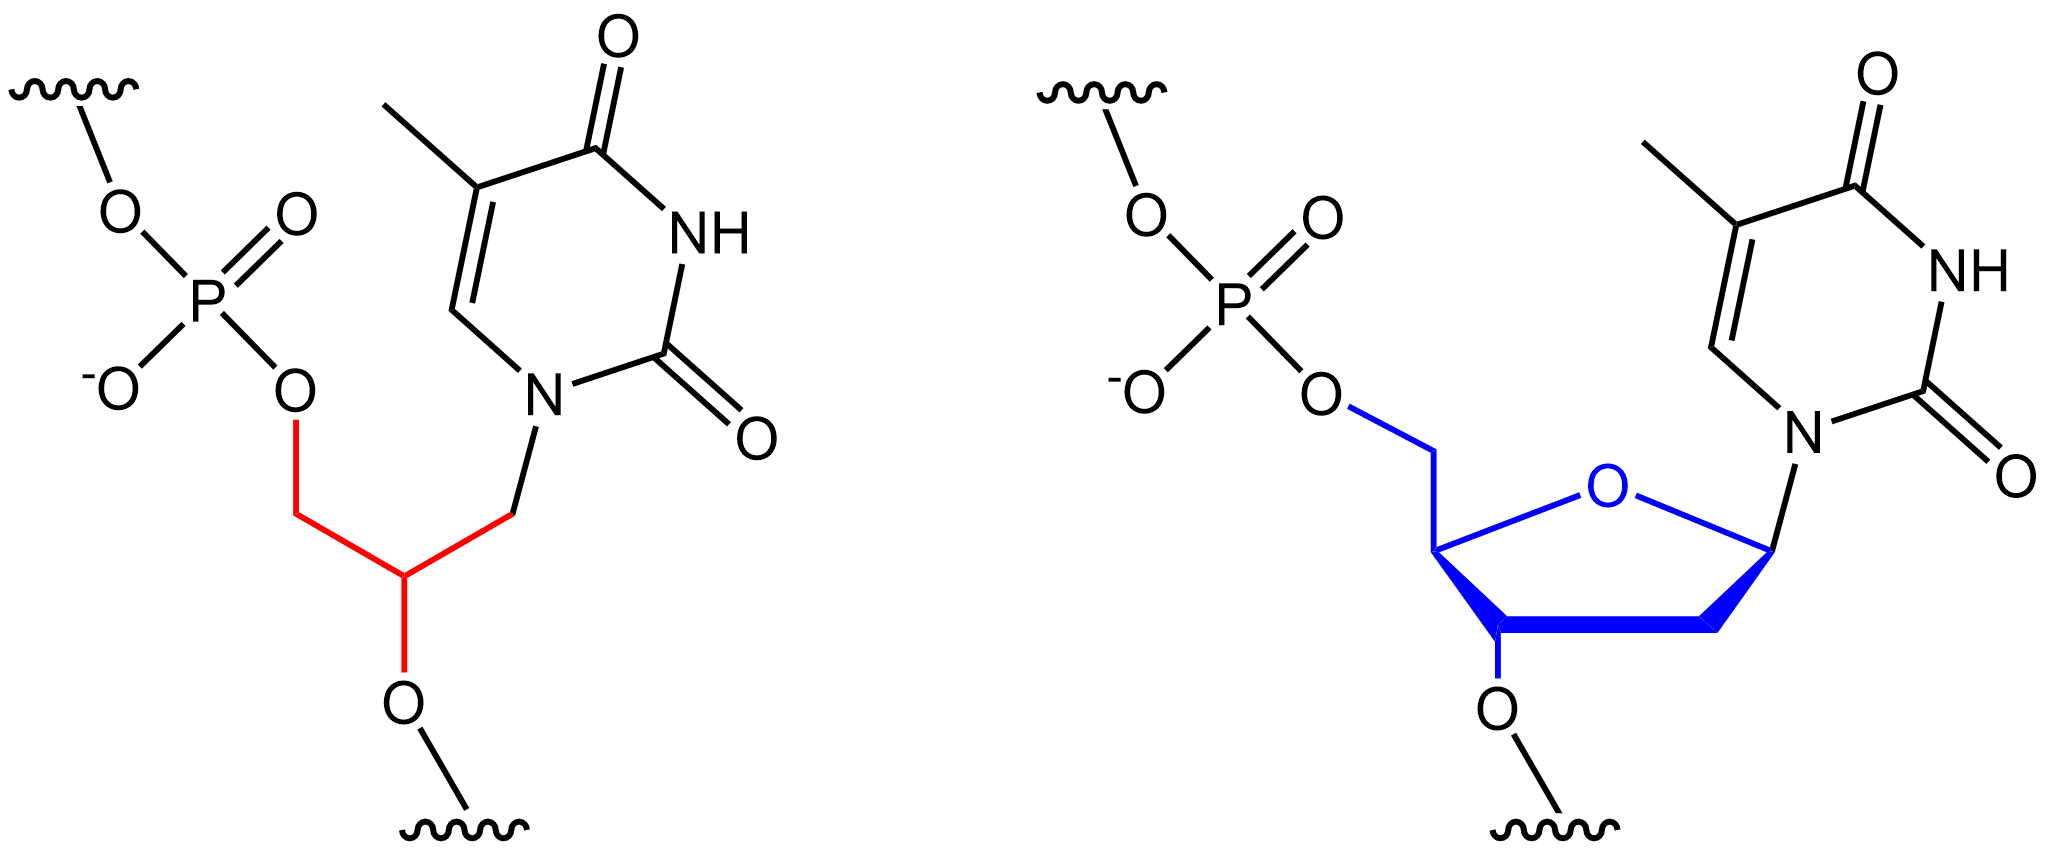 monomer of nucleic acids